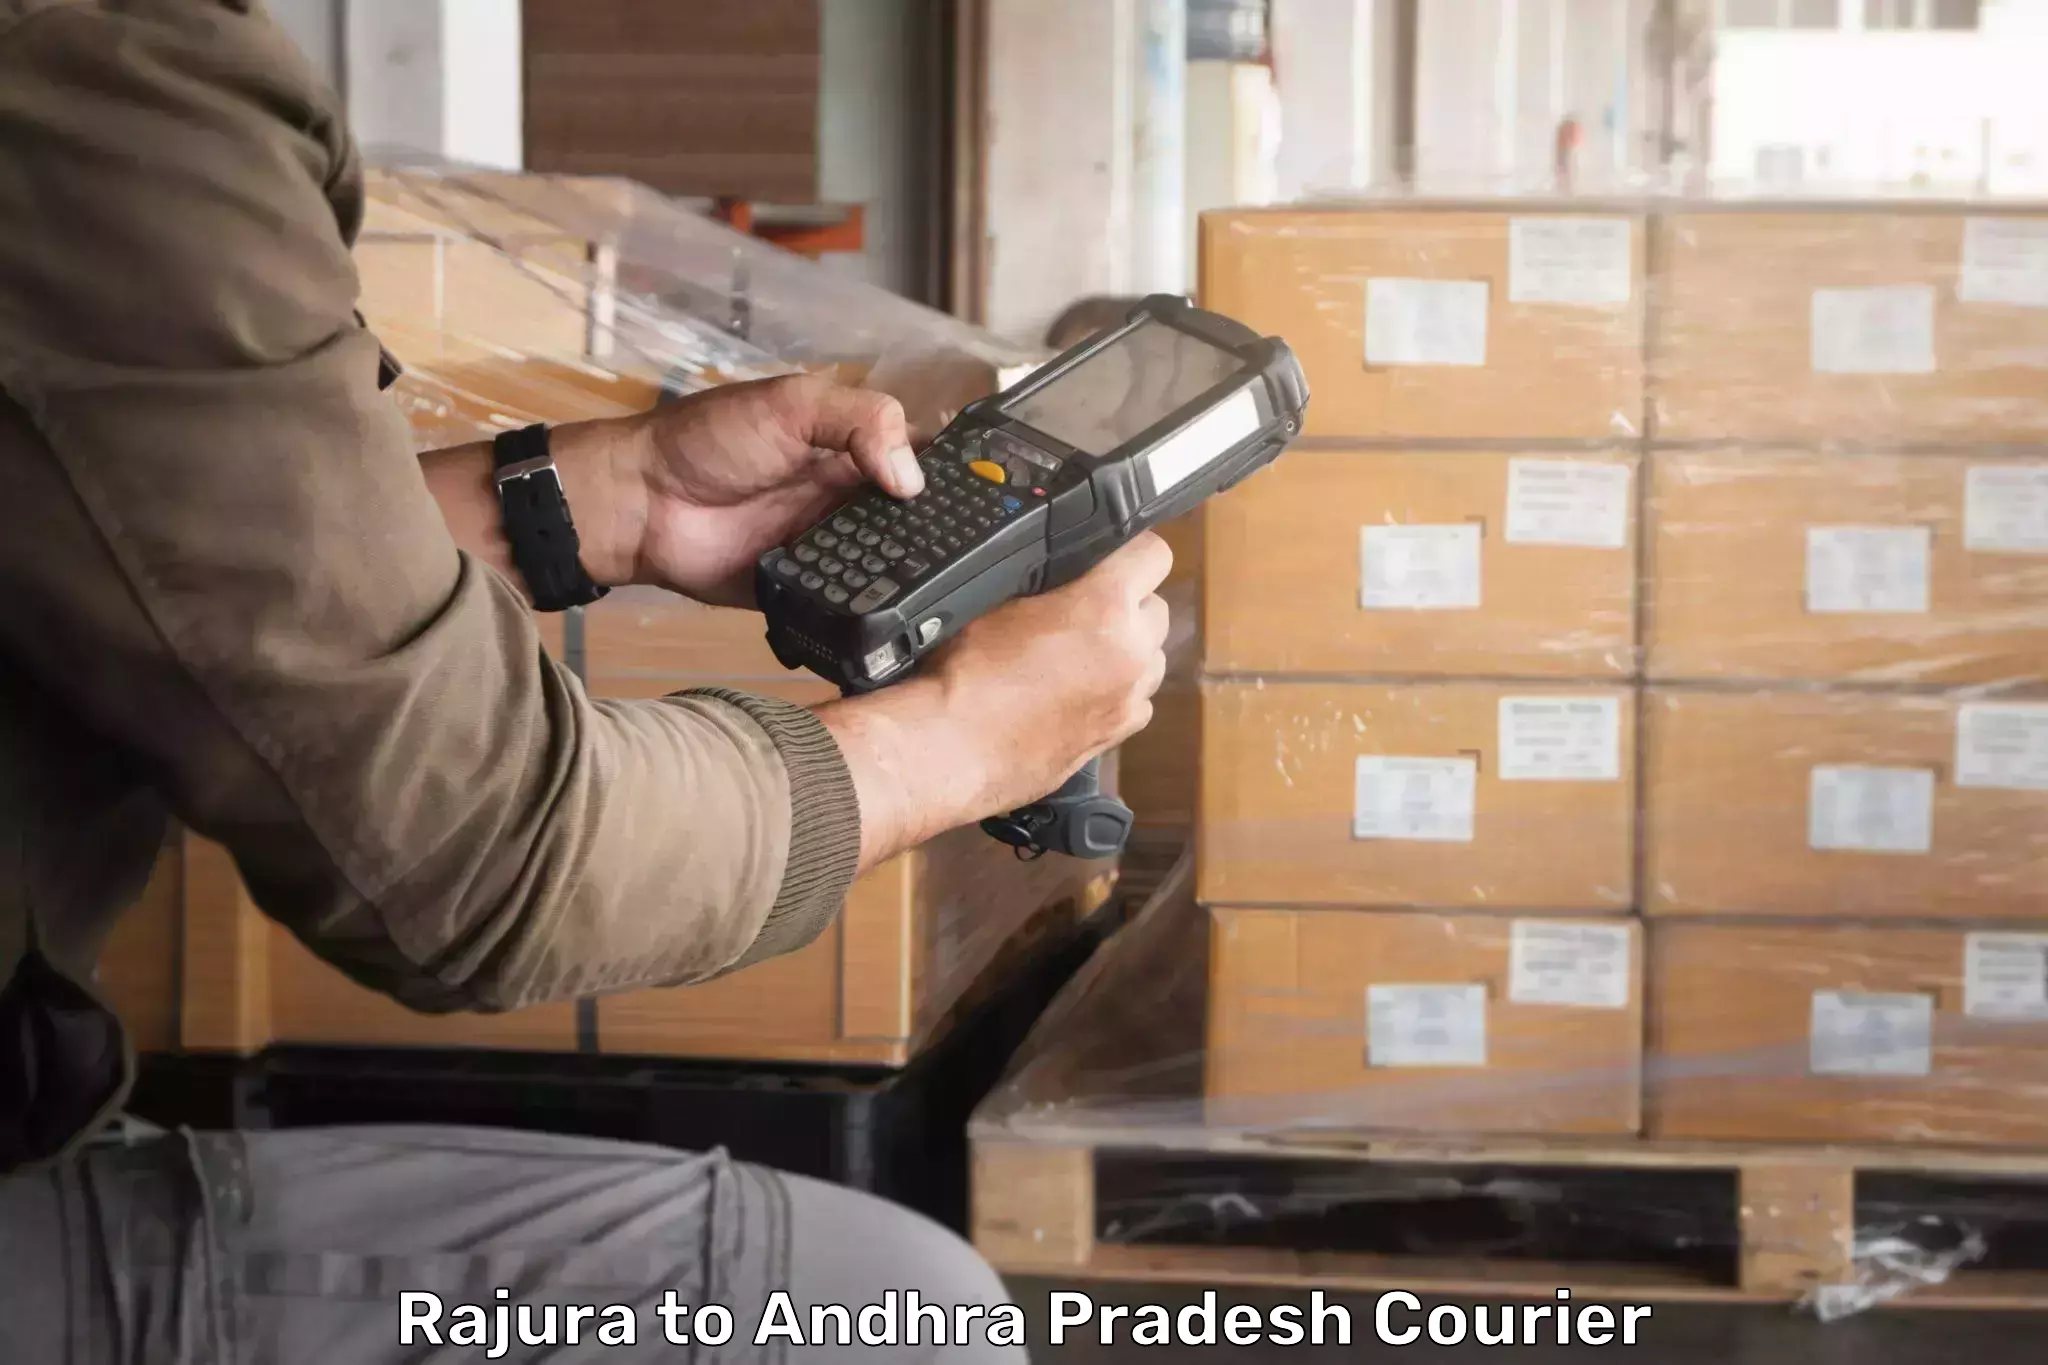 Efficient courier operations Rajura to Tirupati